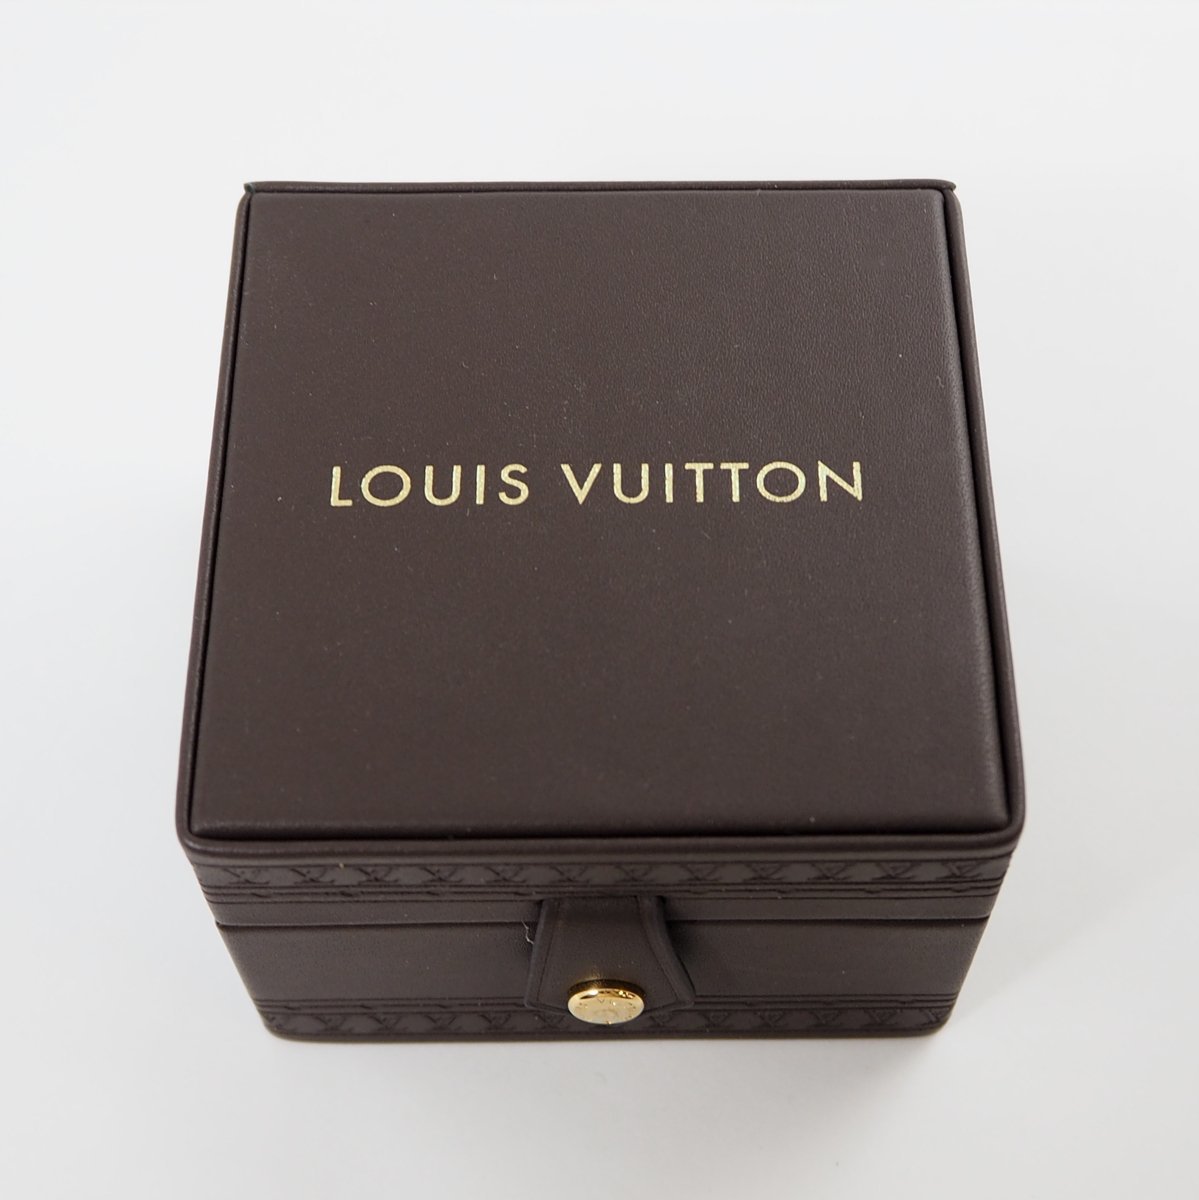 Louis Vuitton Louis Vuitton earrings case box outer box [151]